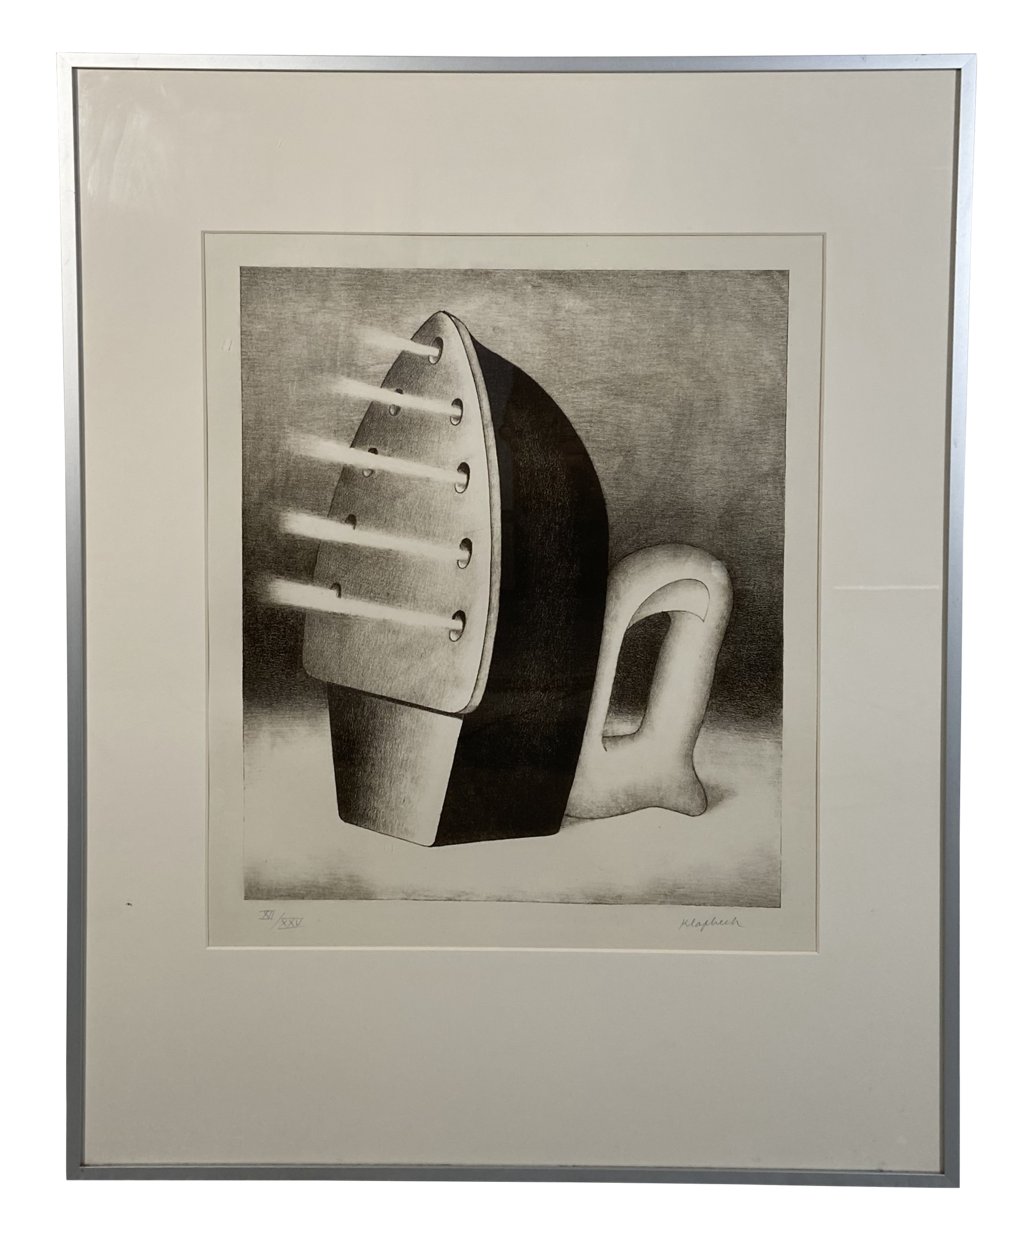 Pop Art Surrealism Movement Lithograph of a Steam Iron Entitled Fanatique by Conrad Kaphleck